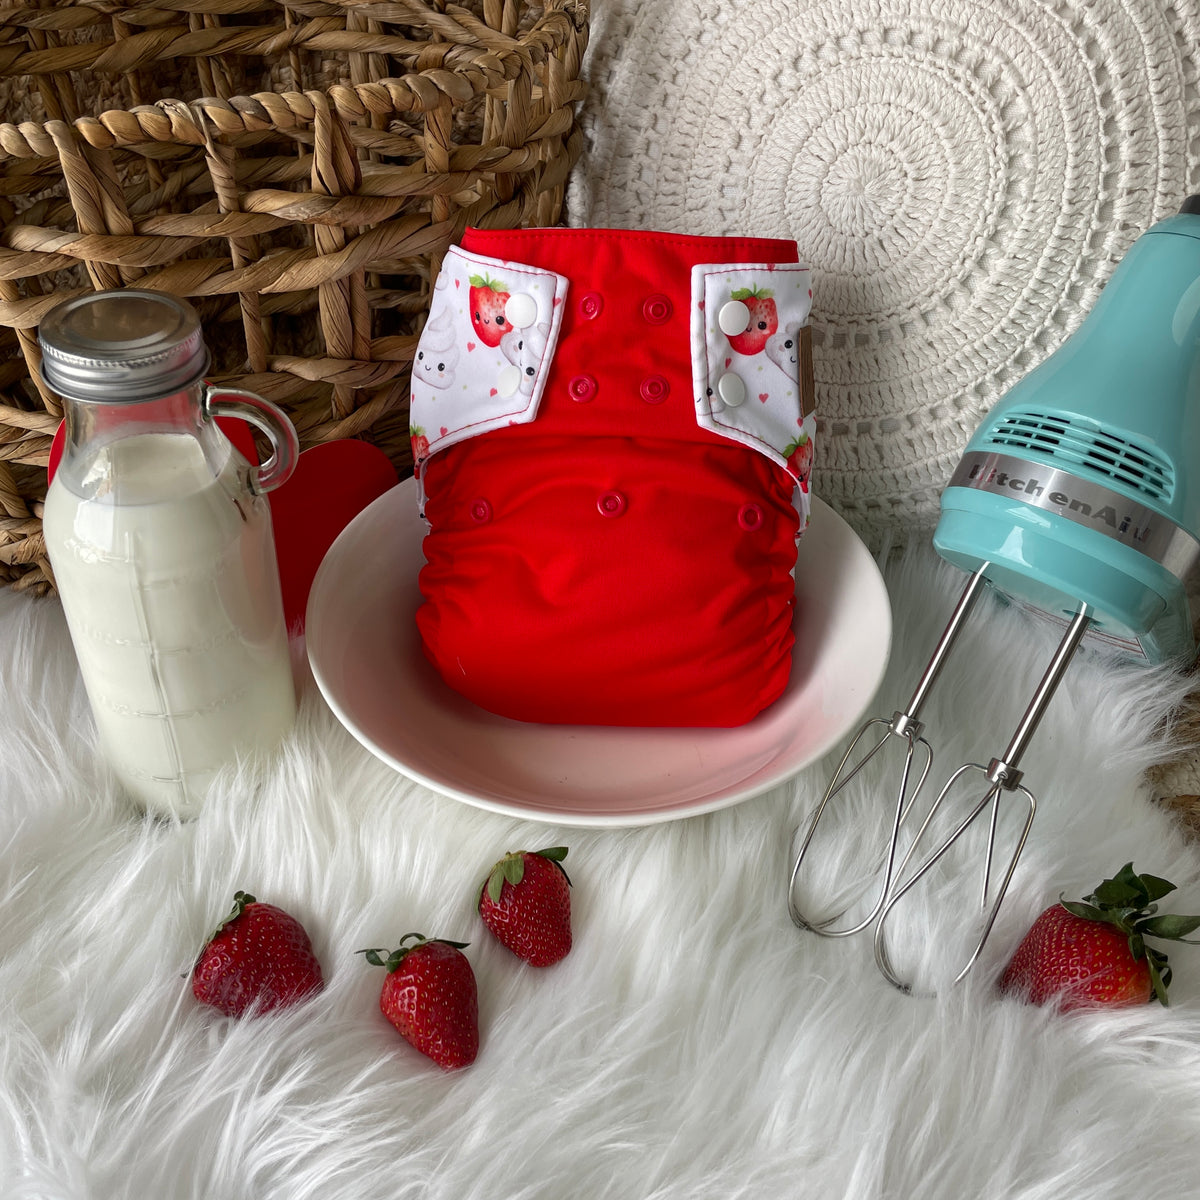 Les Confections Lili | Washable diaper | GRANDE taille | The love birds - Strawberry & Cream (wrap)